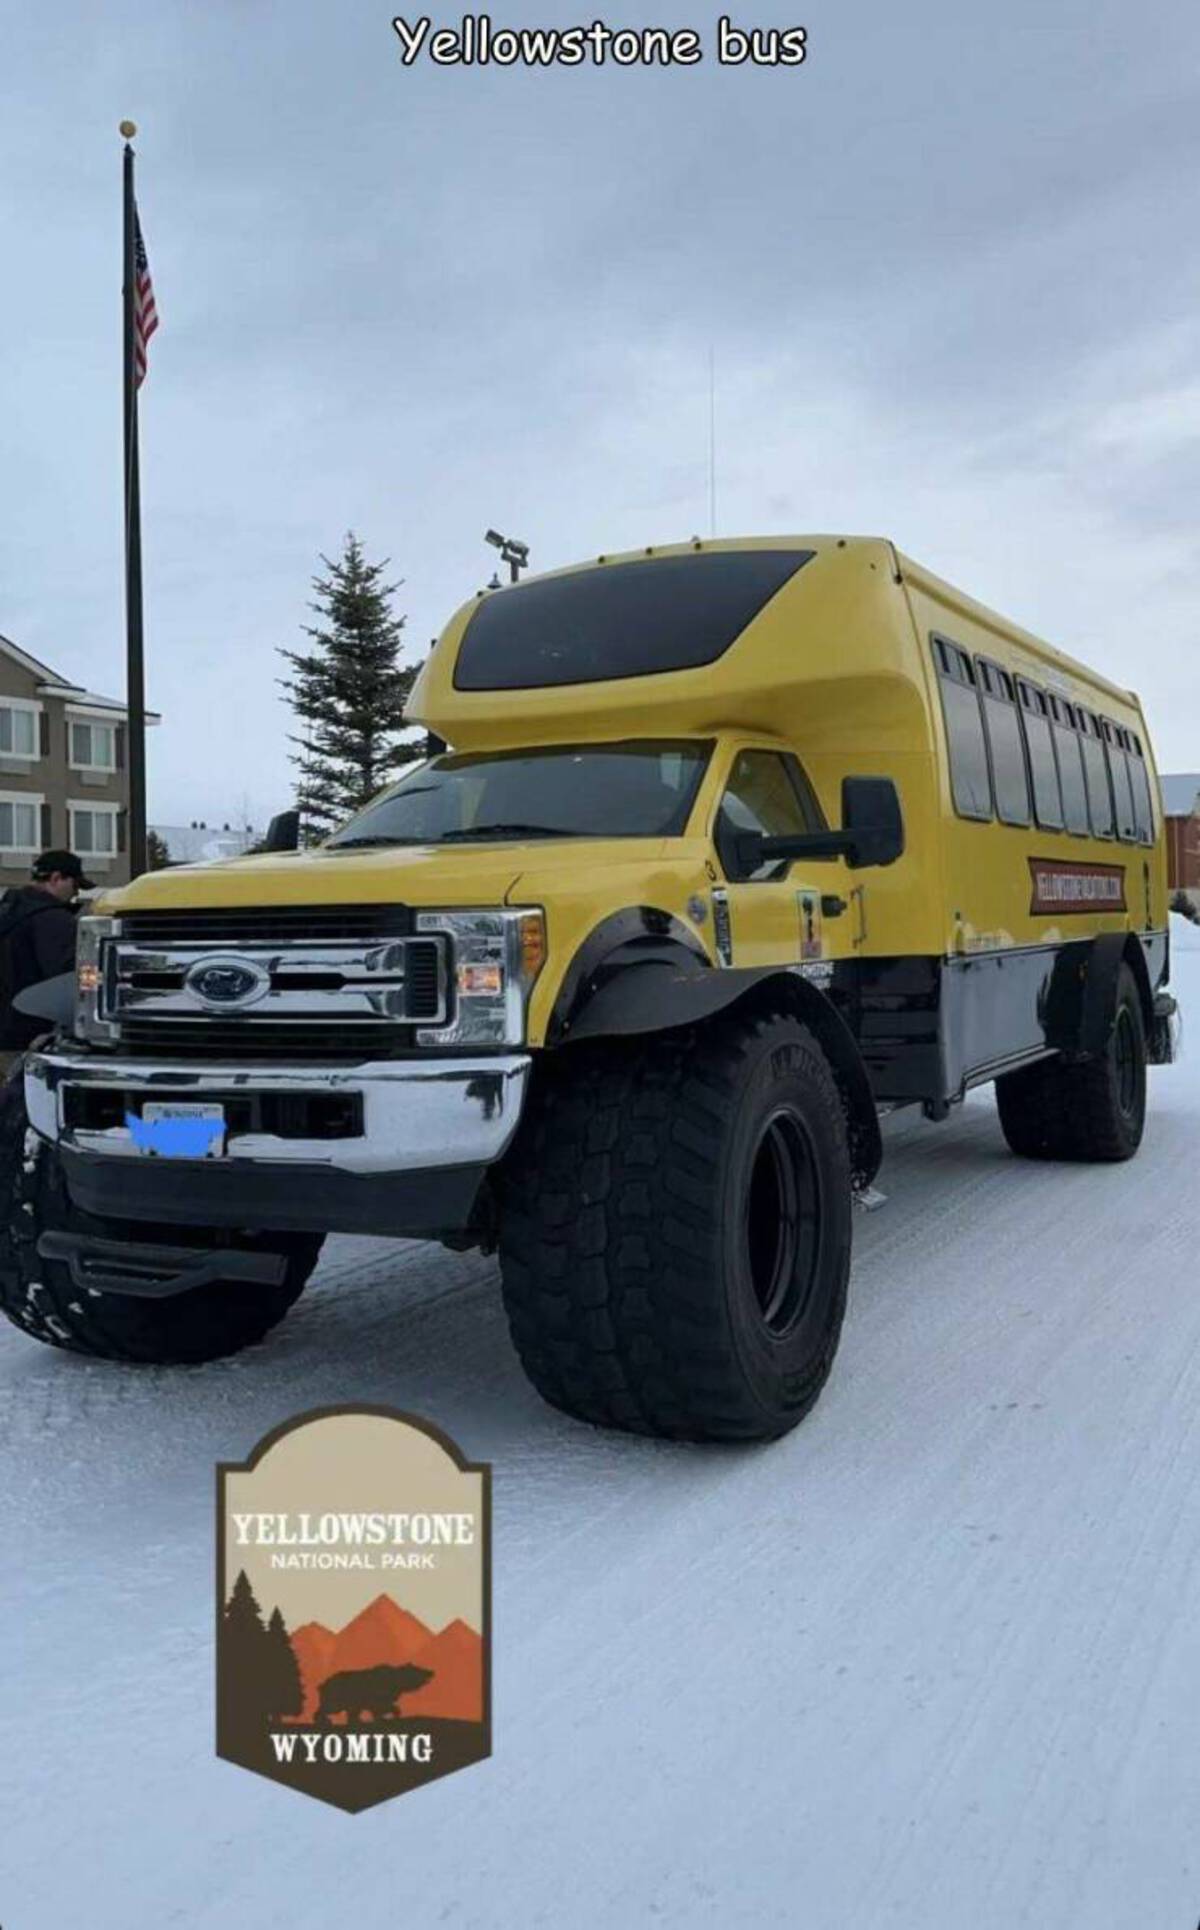 bumper - Yellowstone bus G Yellowstone National Park Wyoming